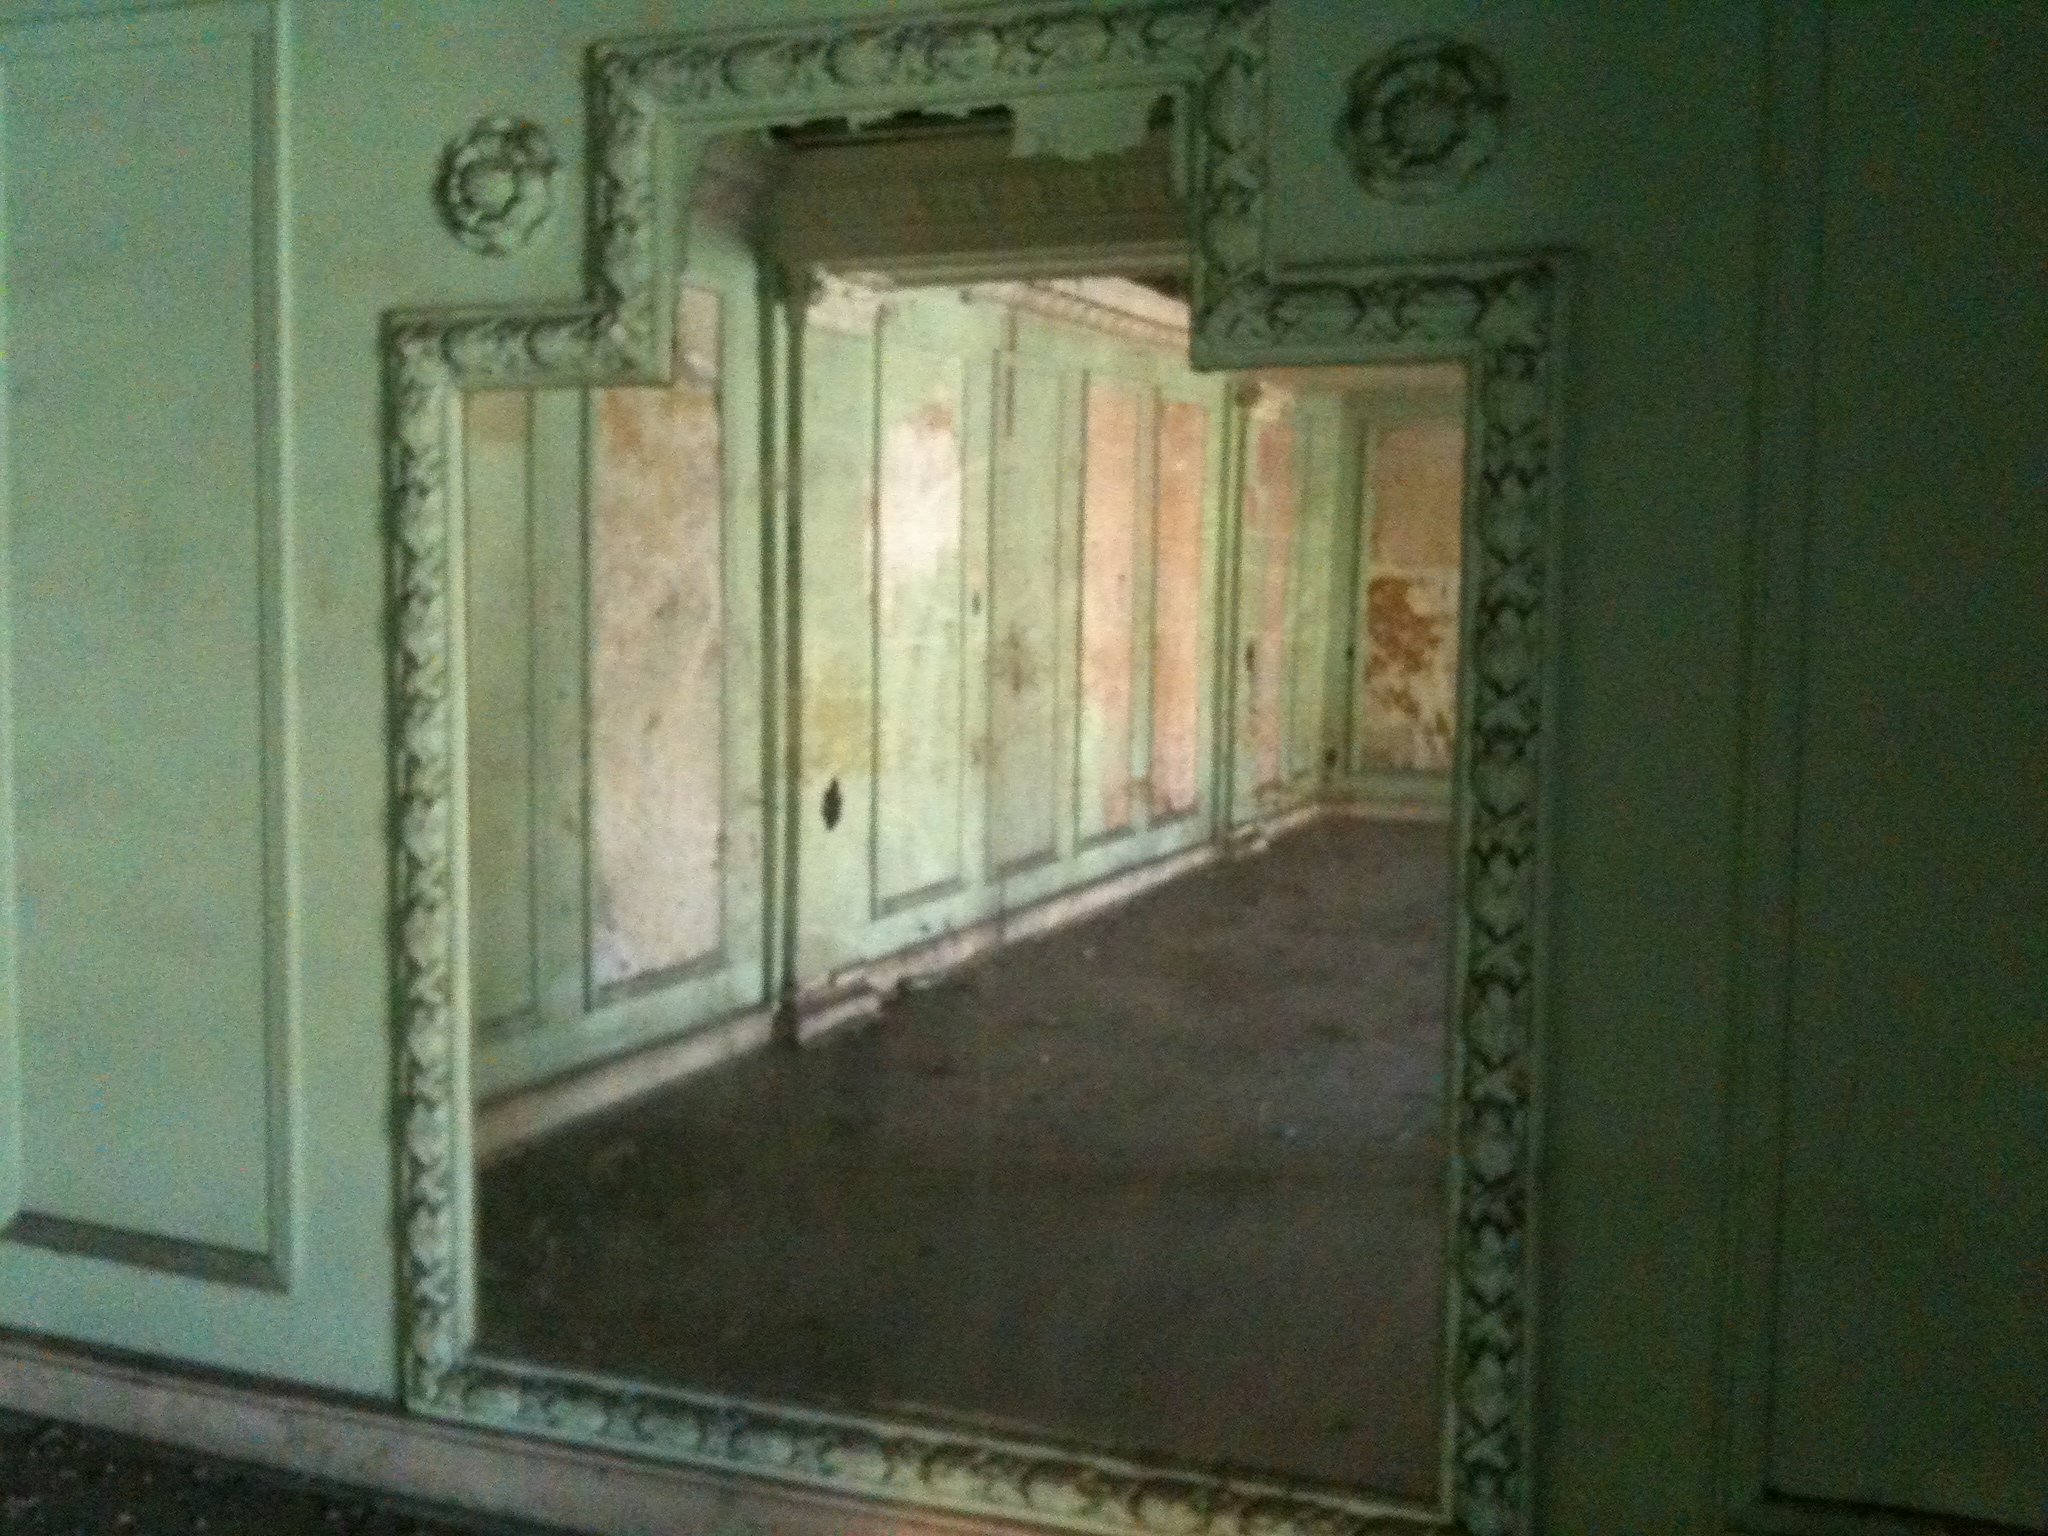 Mirror in ballroom of Whiteladies Picture House